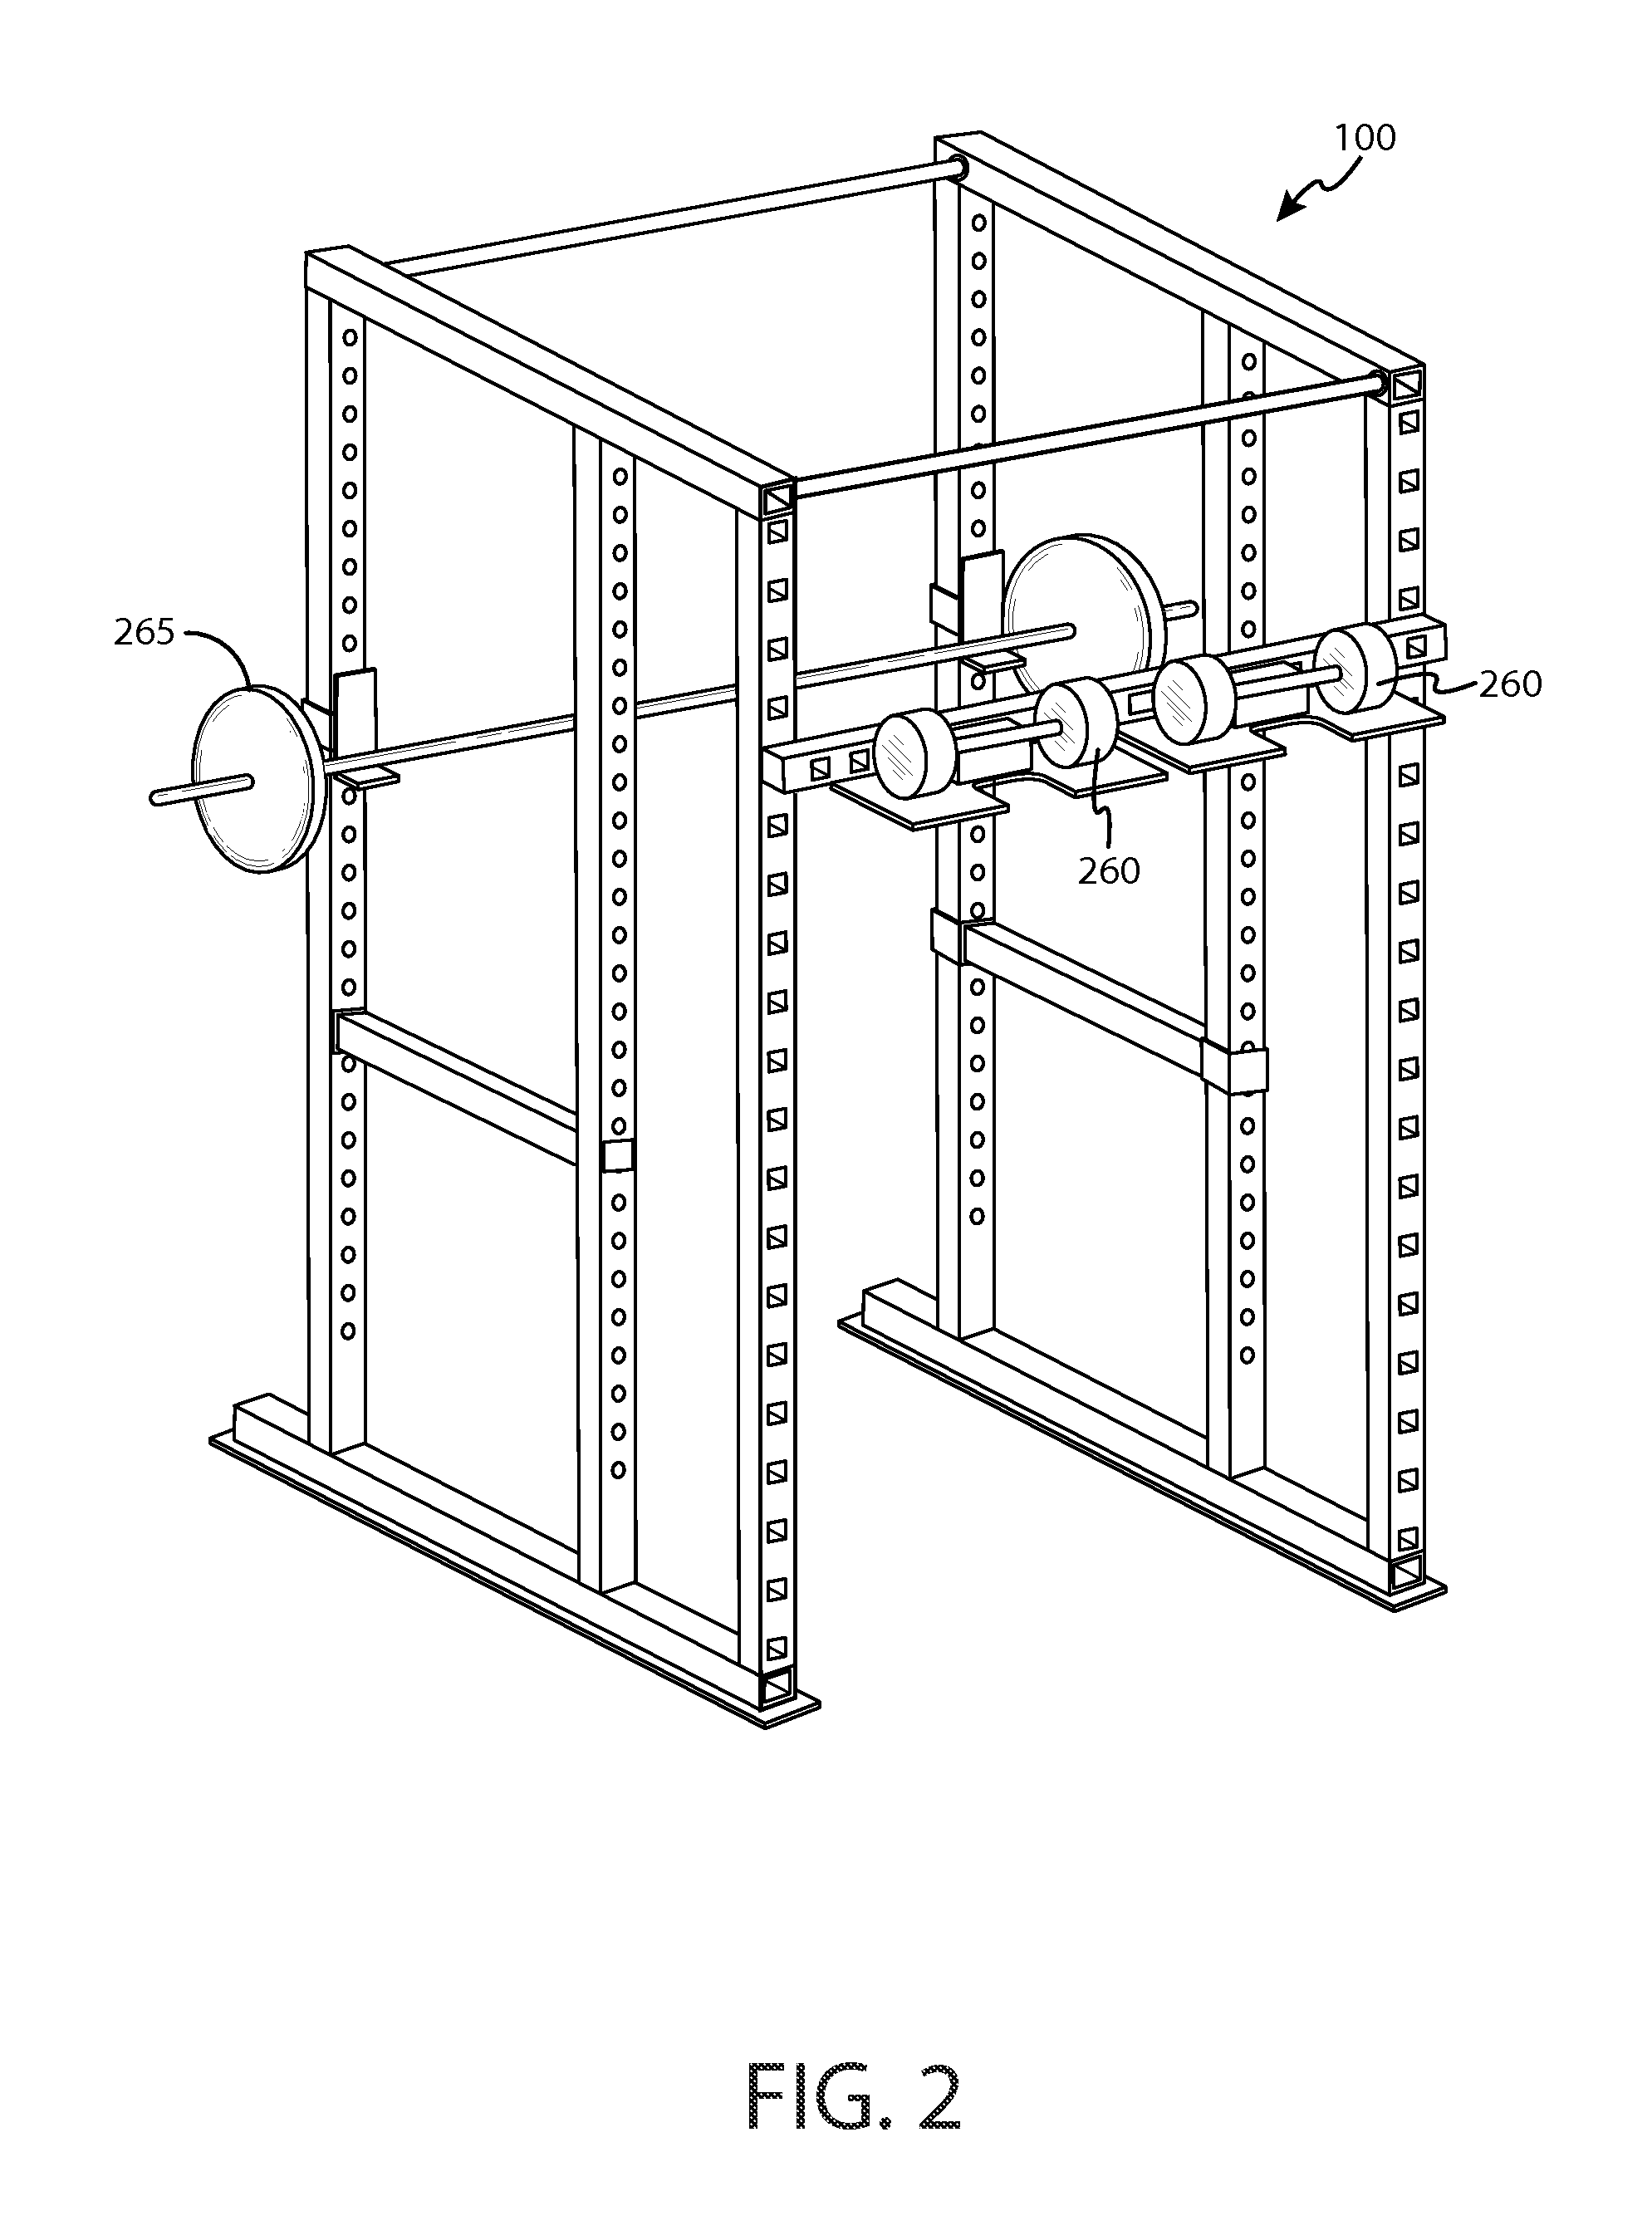 Dumbbell power rack apparatus